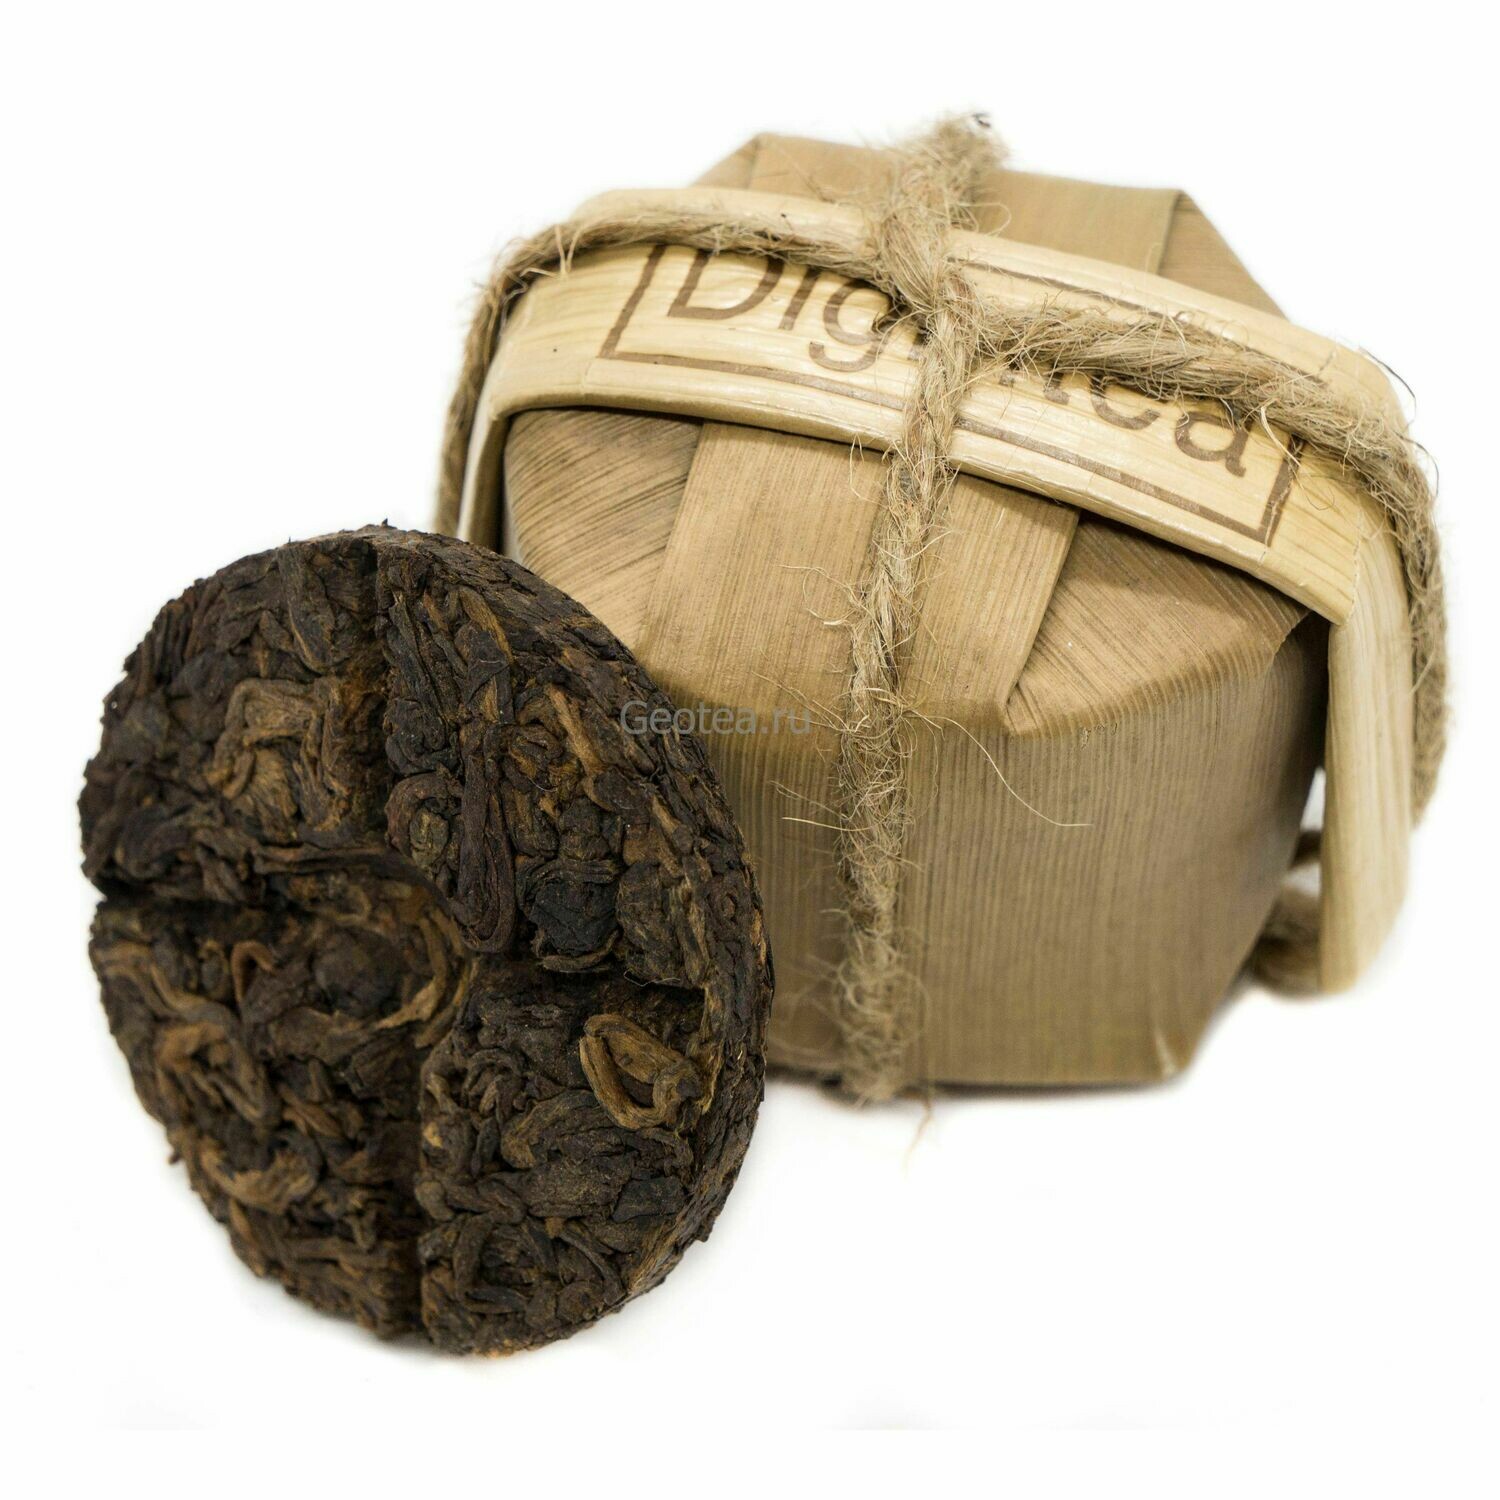 Чай Шу Пуэр "Digintea tea flapjacks" в бамбуке, 75гр.